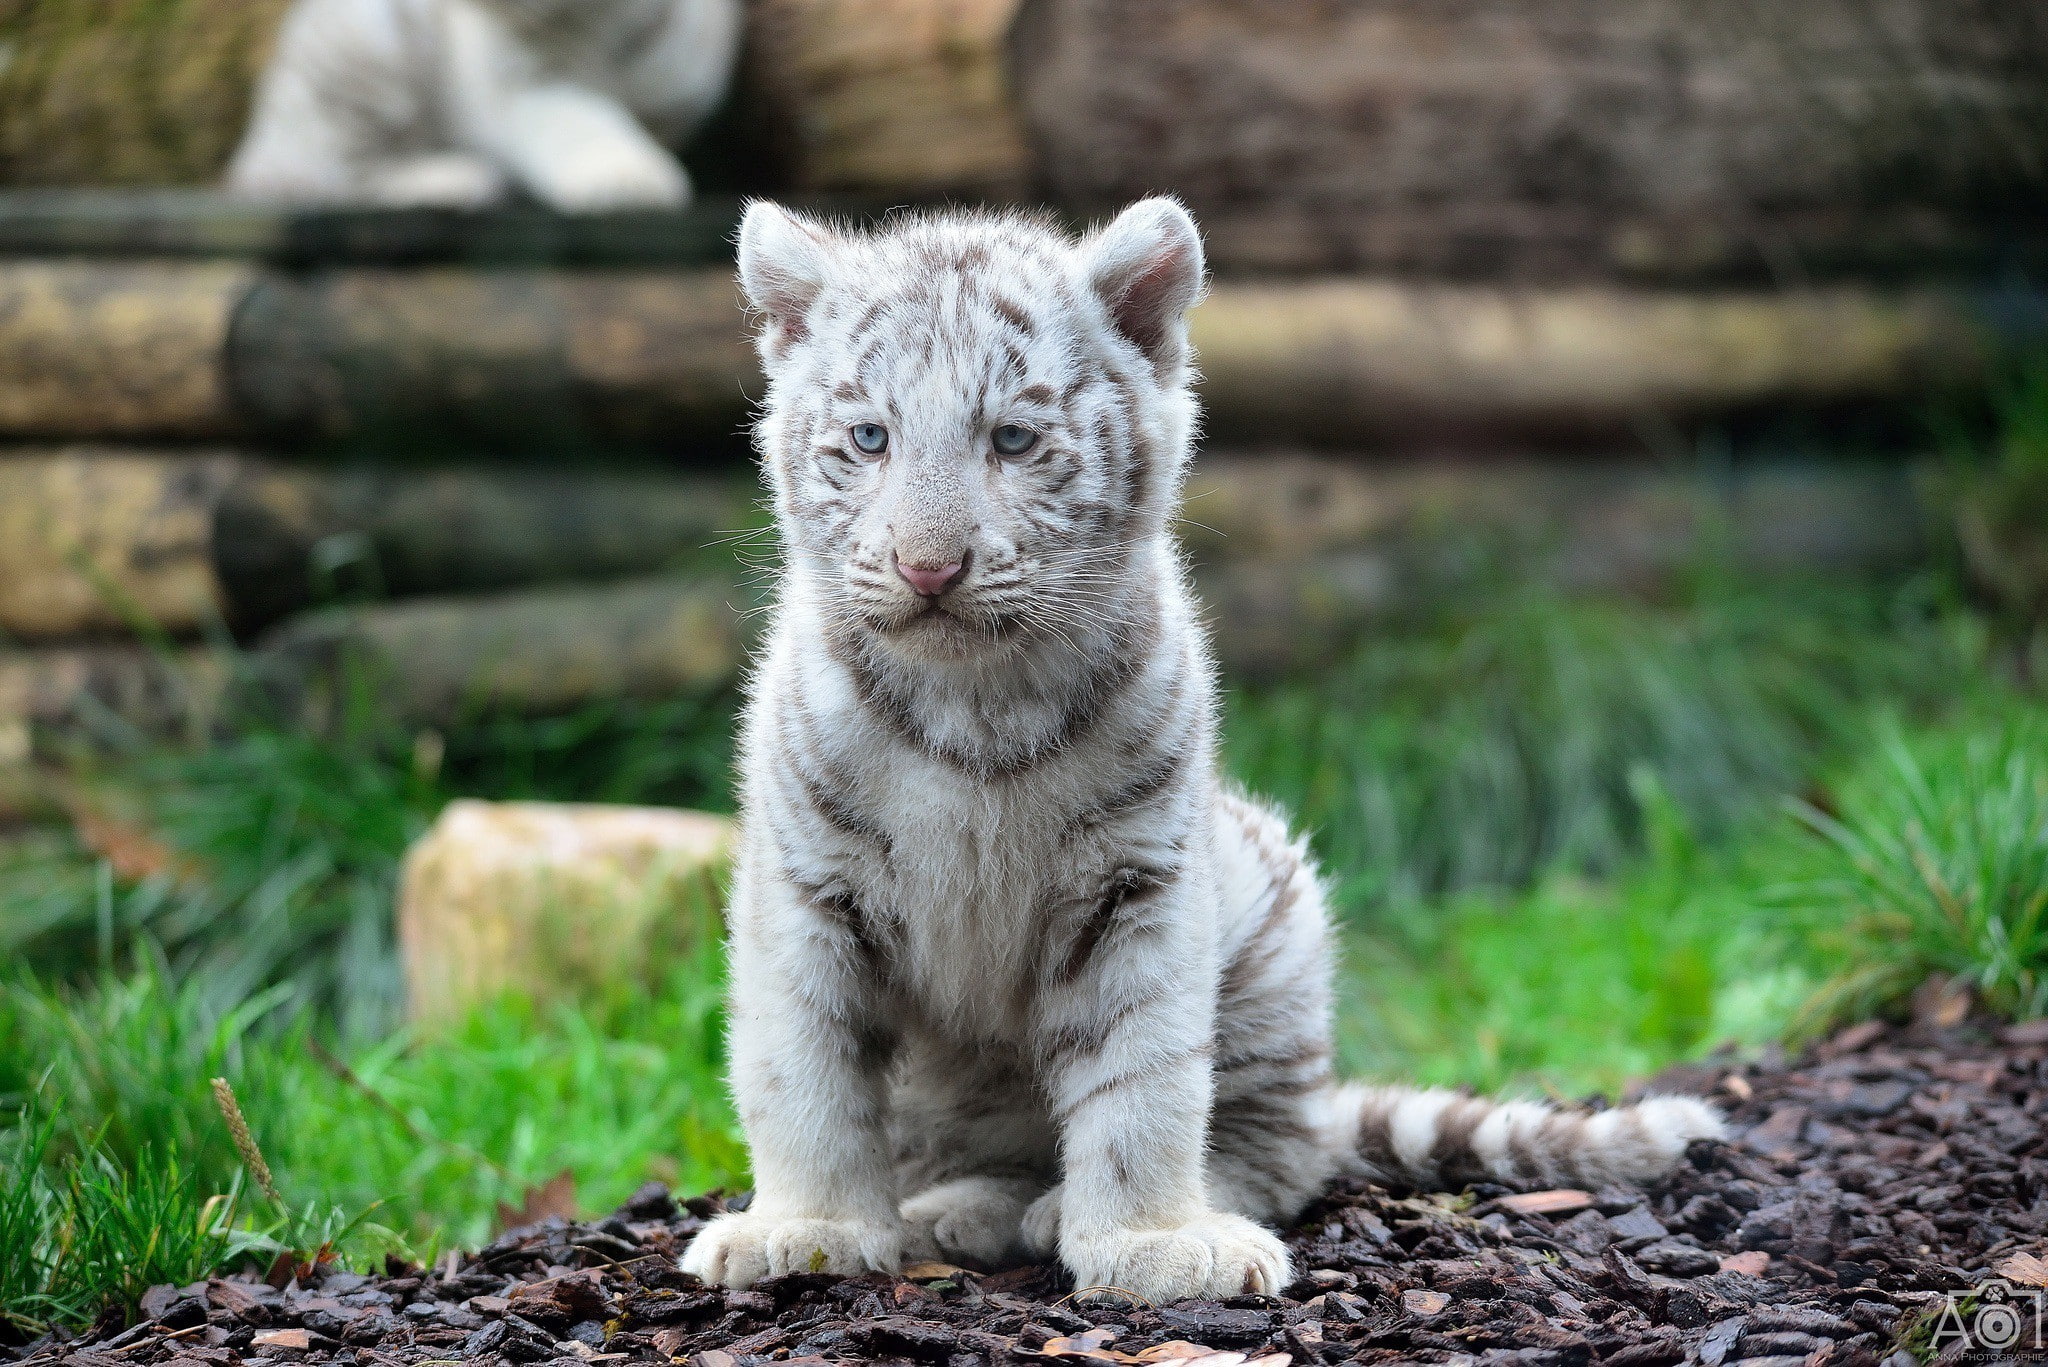 White tiger, baby, white tiger cub, predator, kitten, wild cat